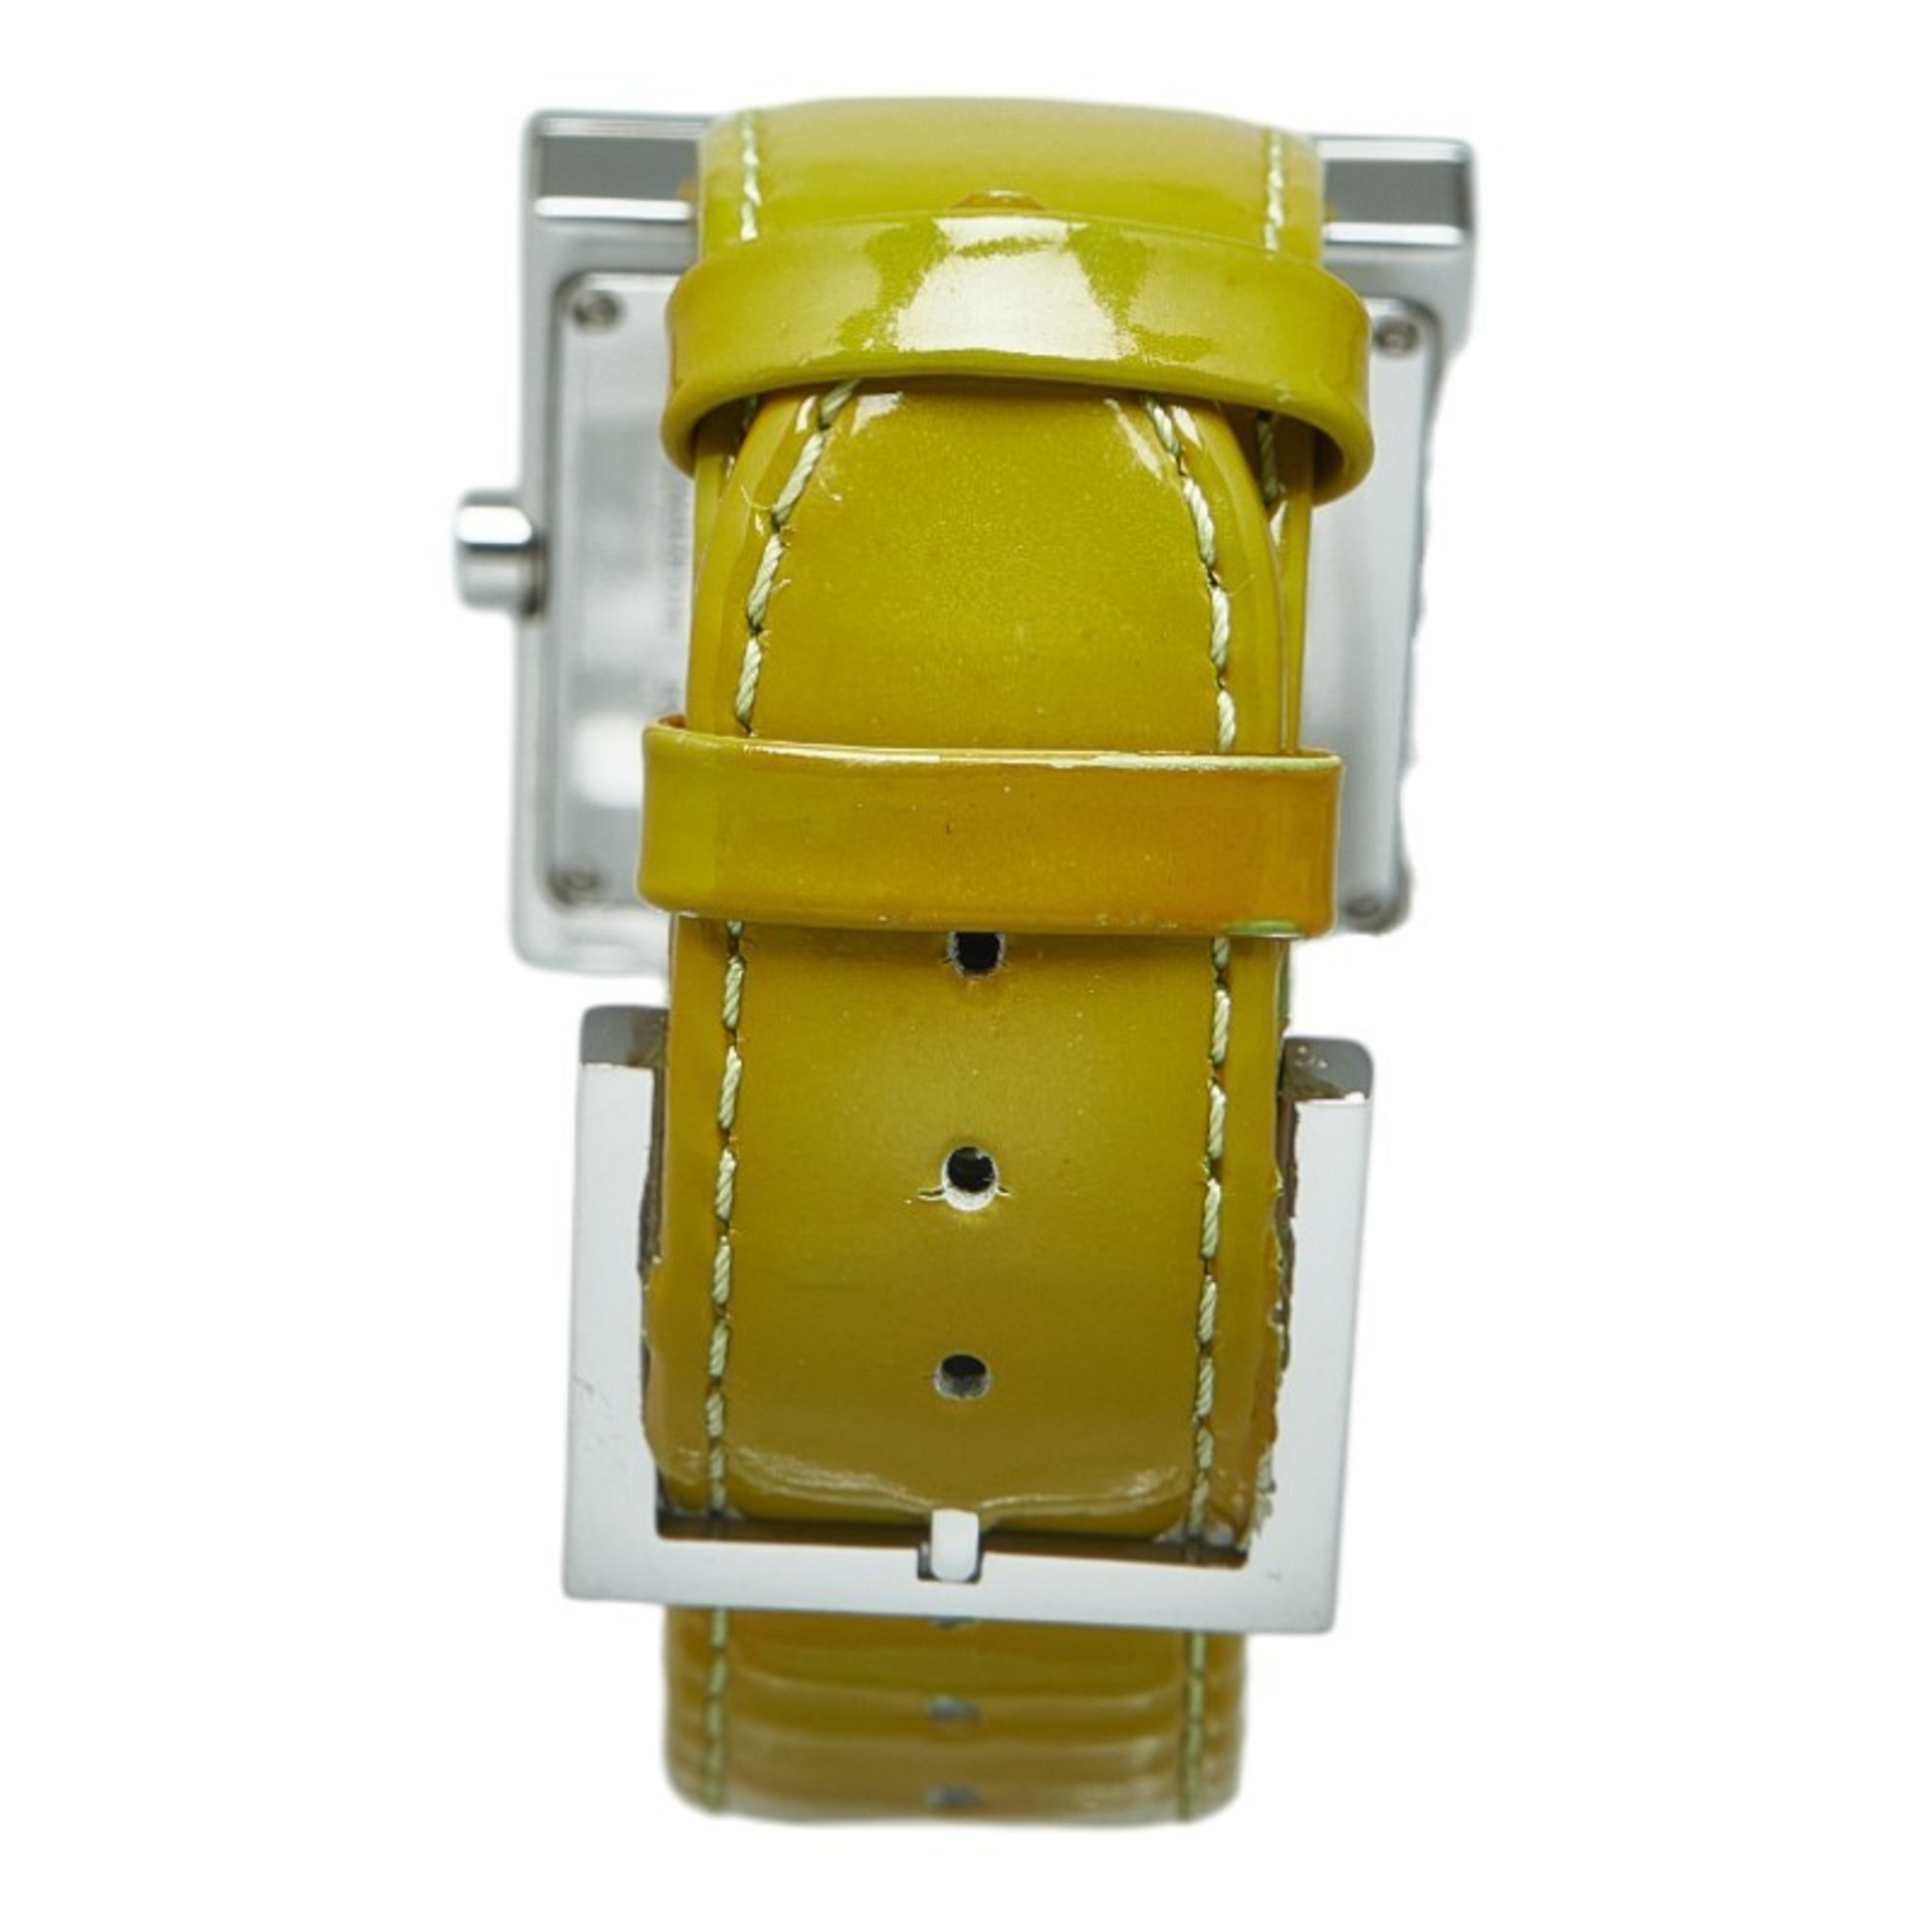 Fendi FF Watch 012-4000L-024 Quartz Yellow Dial Stainless Steel Enamel Women's FENDI